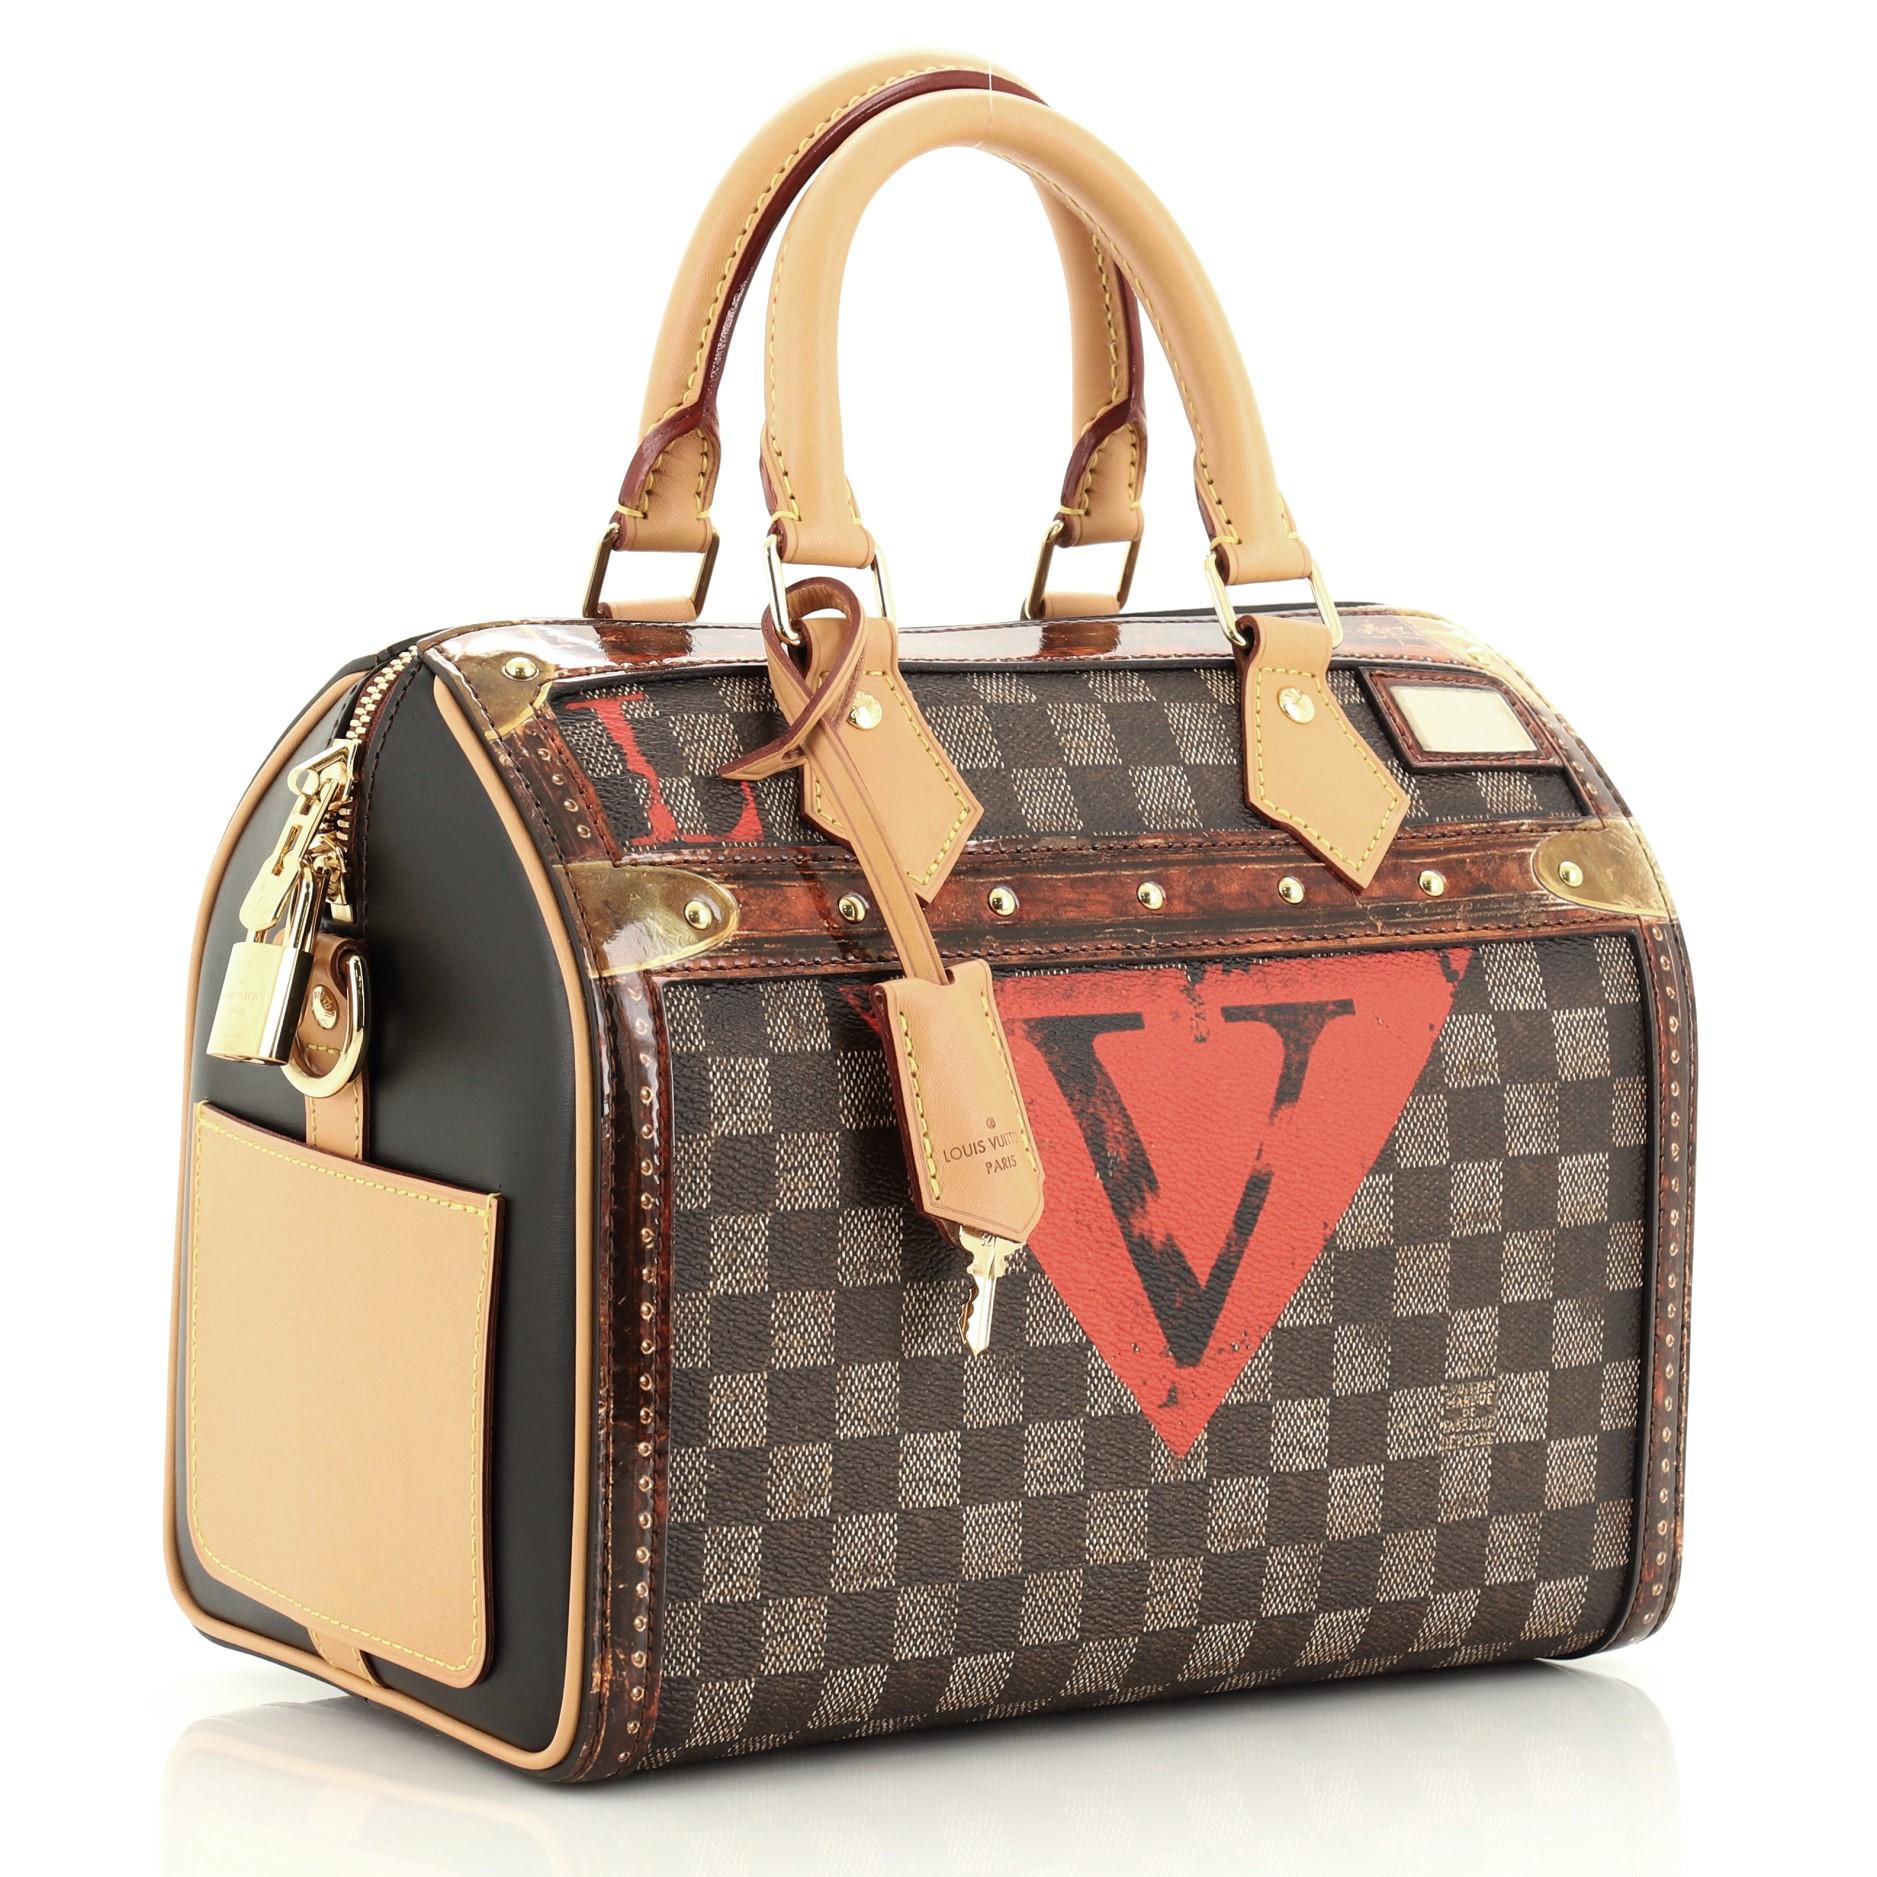 Black Louis Vuitton Speedy Bandouliere Bag Limited Edition Damier Time Trunk 25